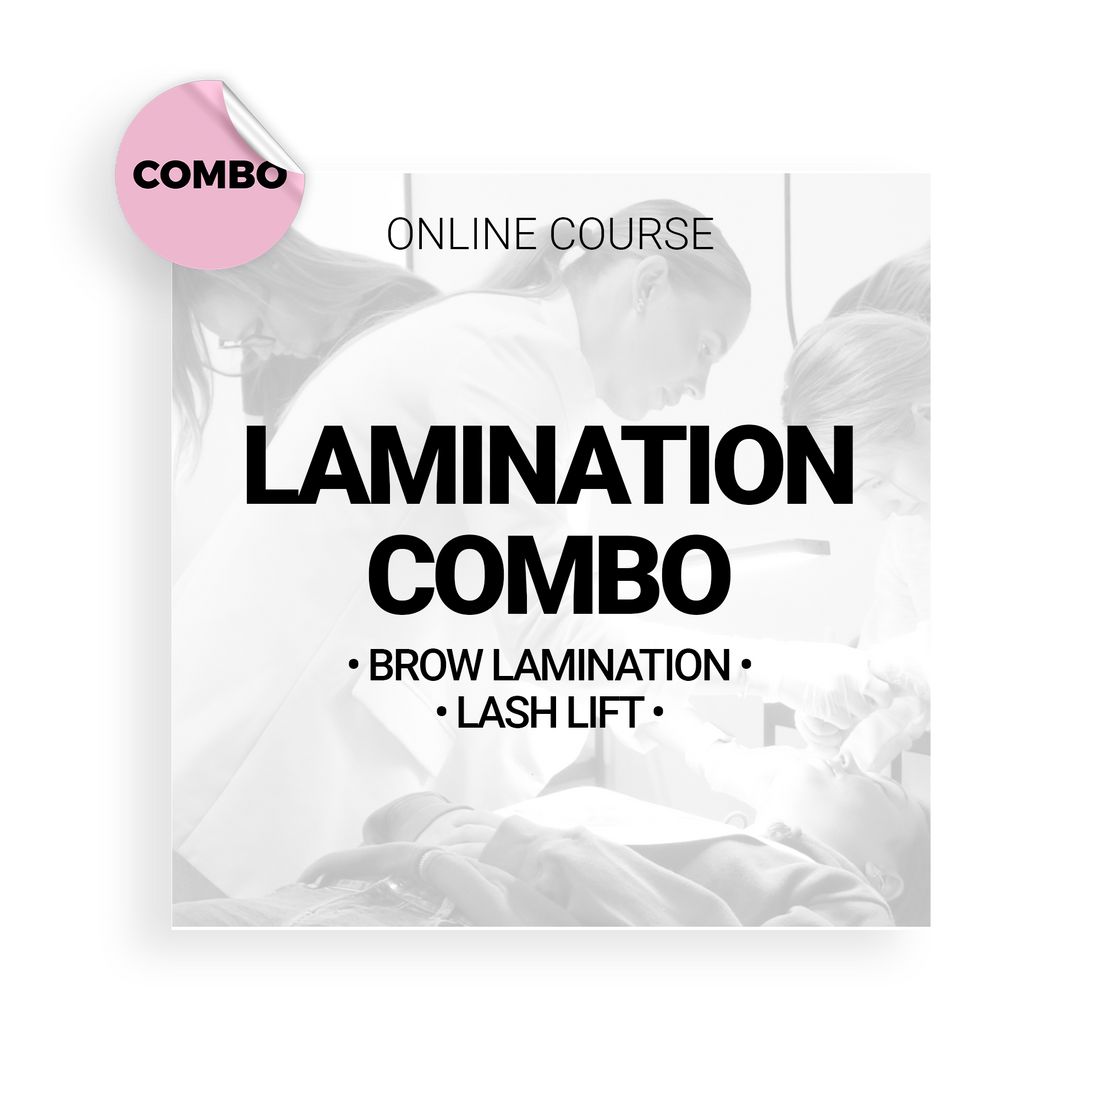 LAMINATION COMBO: BROW LAMINATION • LASH LIFT (ONLINE)